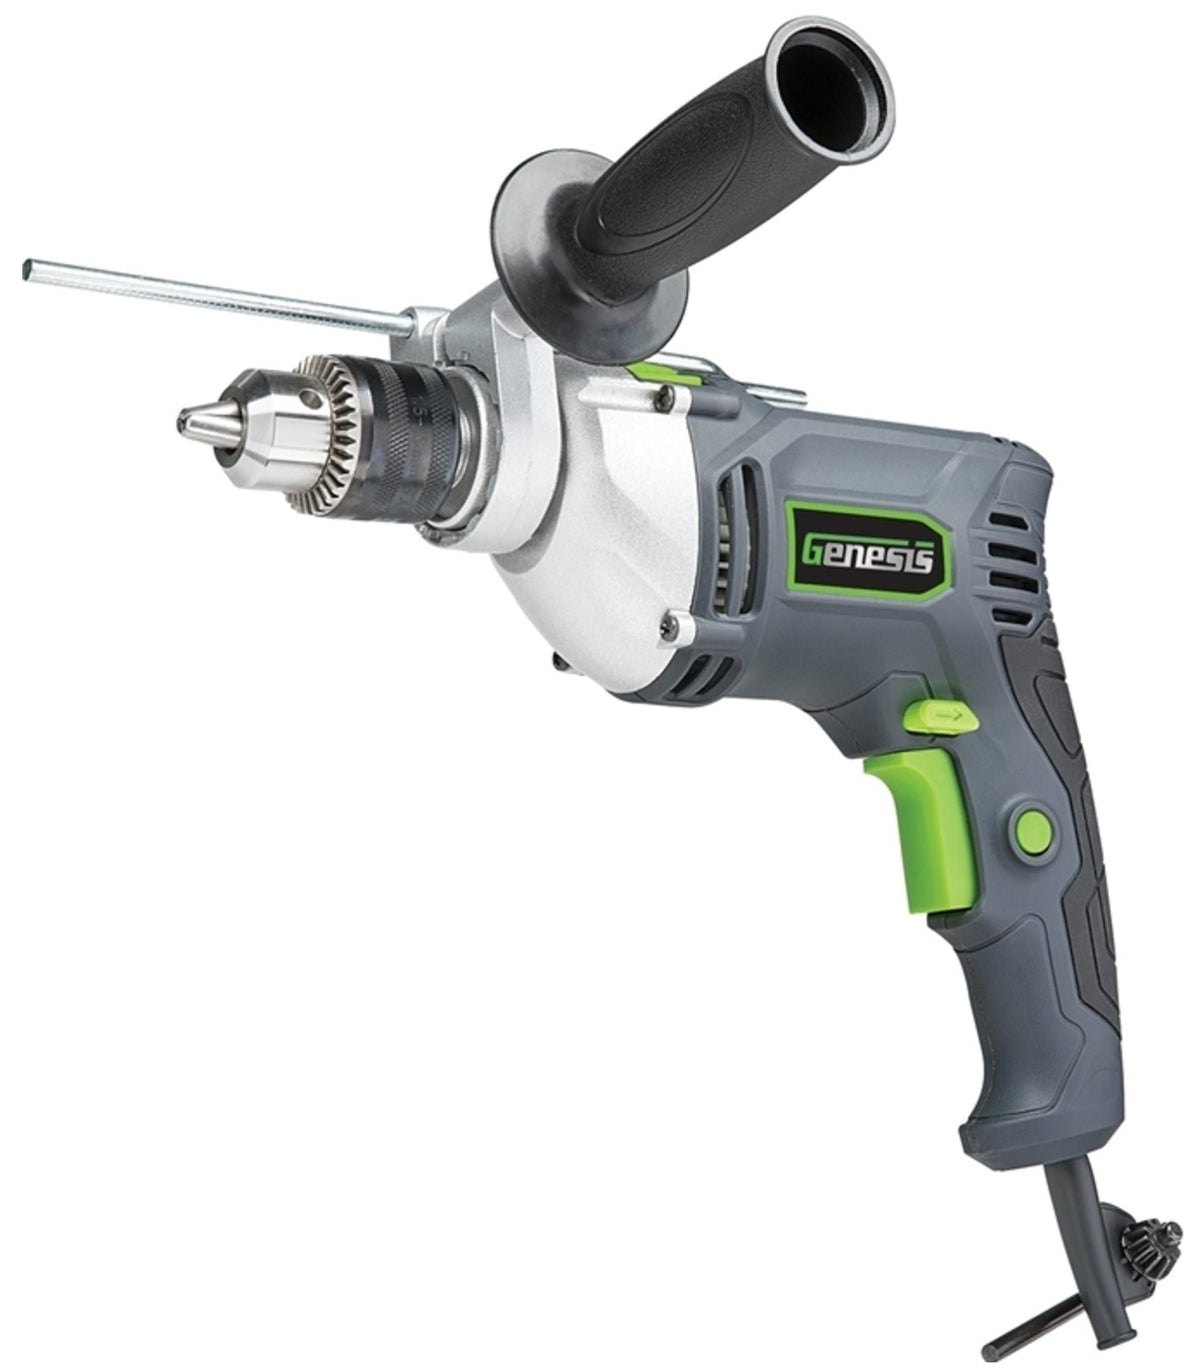 Genesis GHD1275 Hammer Drill, 120 Volts